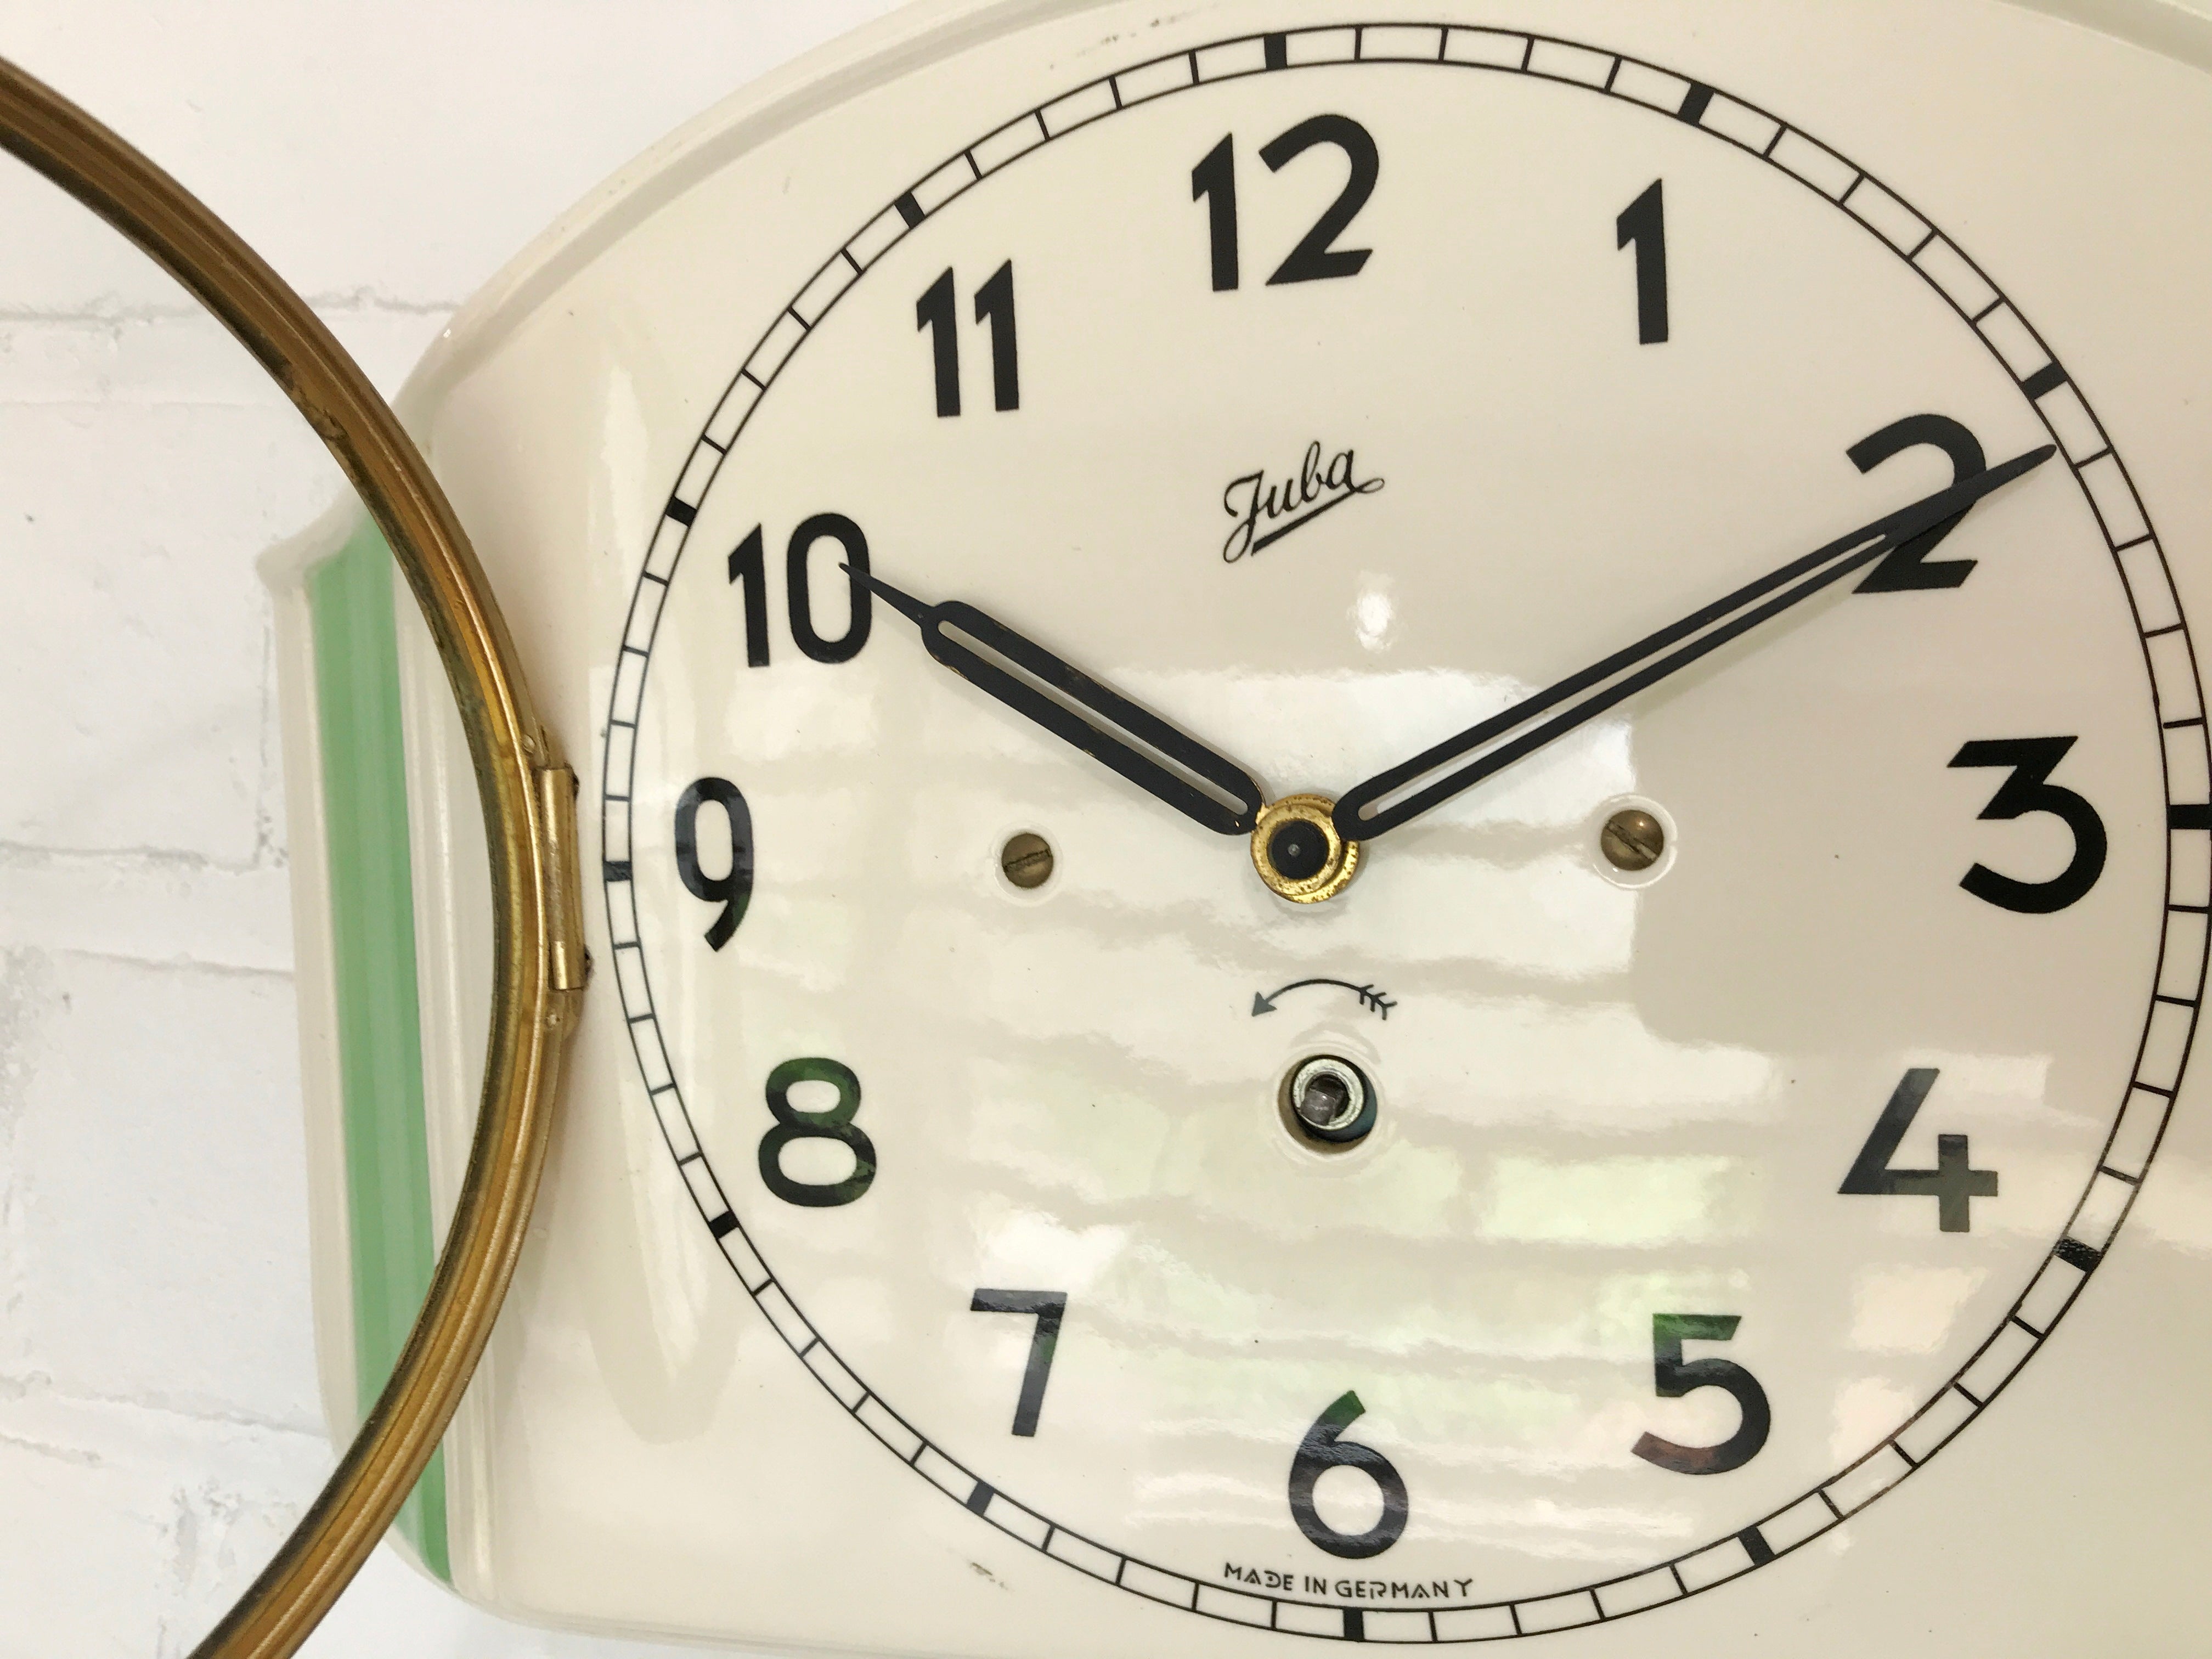 Vintage JUBA Ceramic Wall Clock | eXibit collection